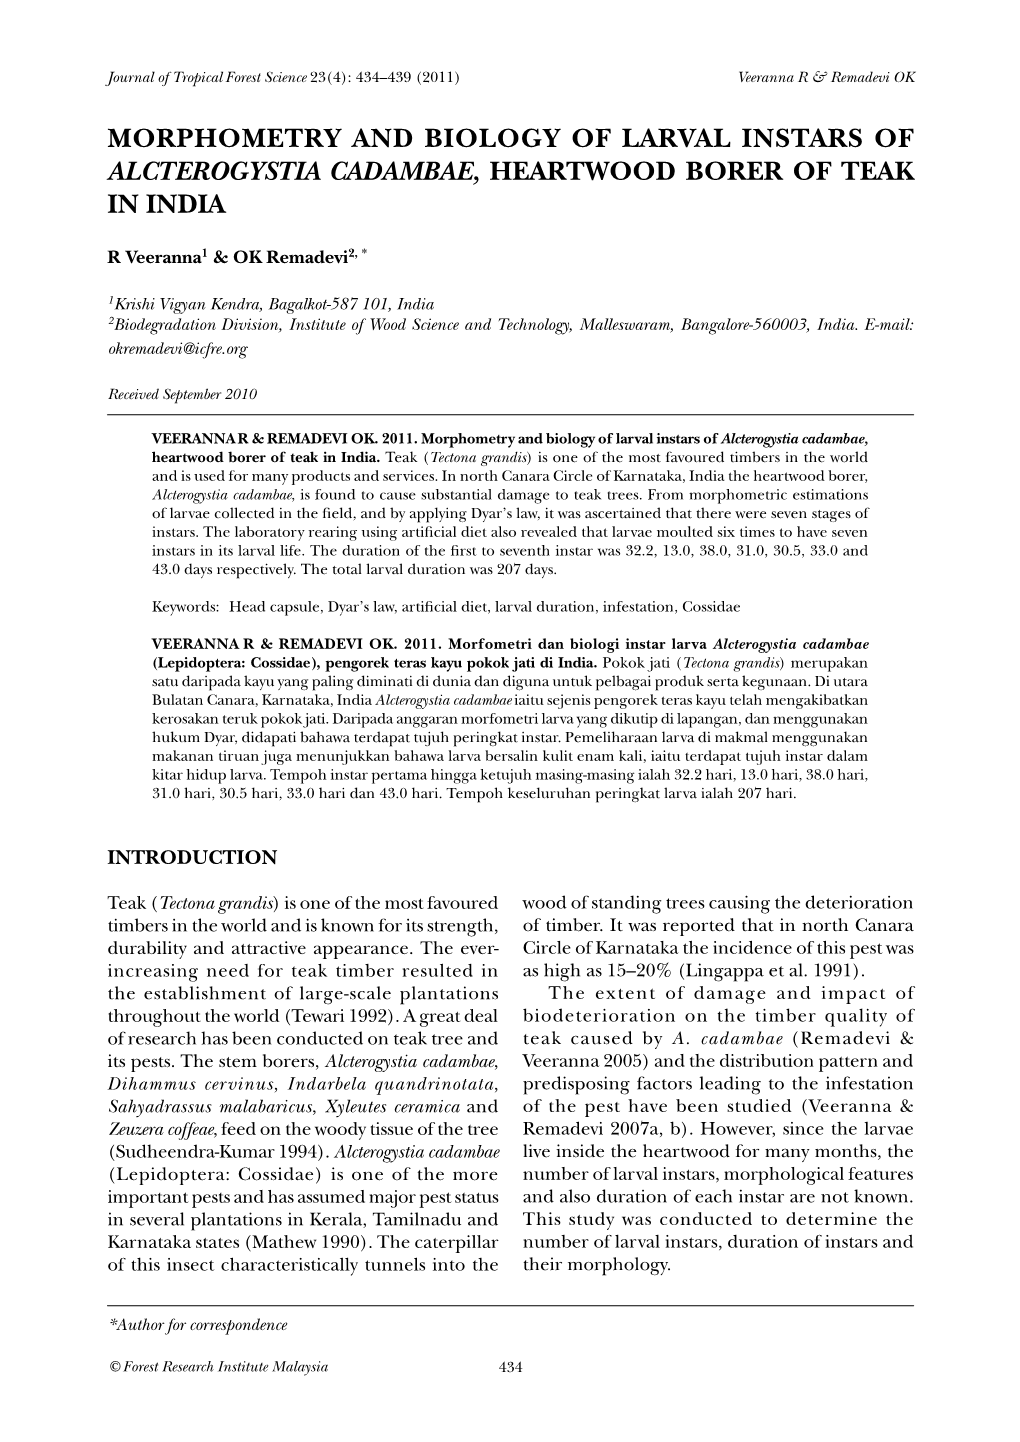 Morphometry and Biology of Larval Instars of Alcterogystia Cadambae, Heartwood Borer of Teak in India